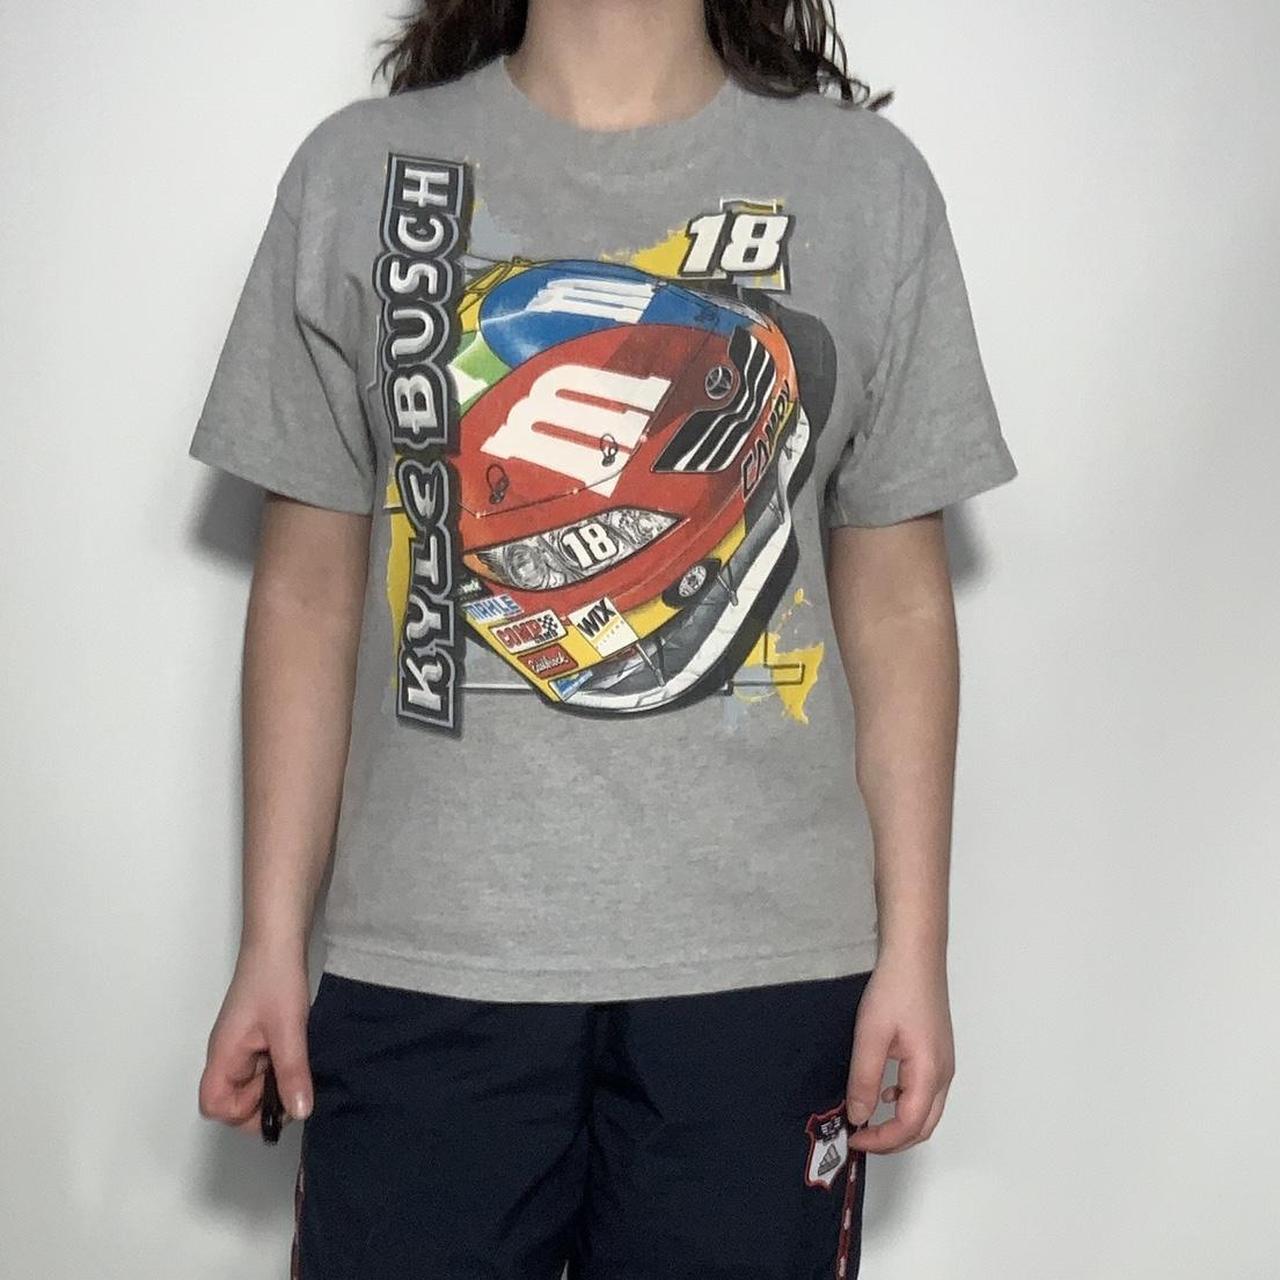 Vintage 90s NASCAR x Kyle Busch M&M graphic printed t-shirt